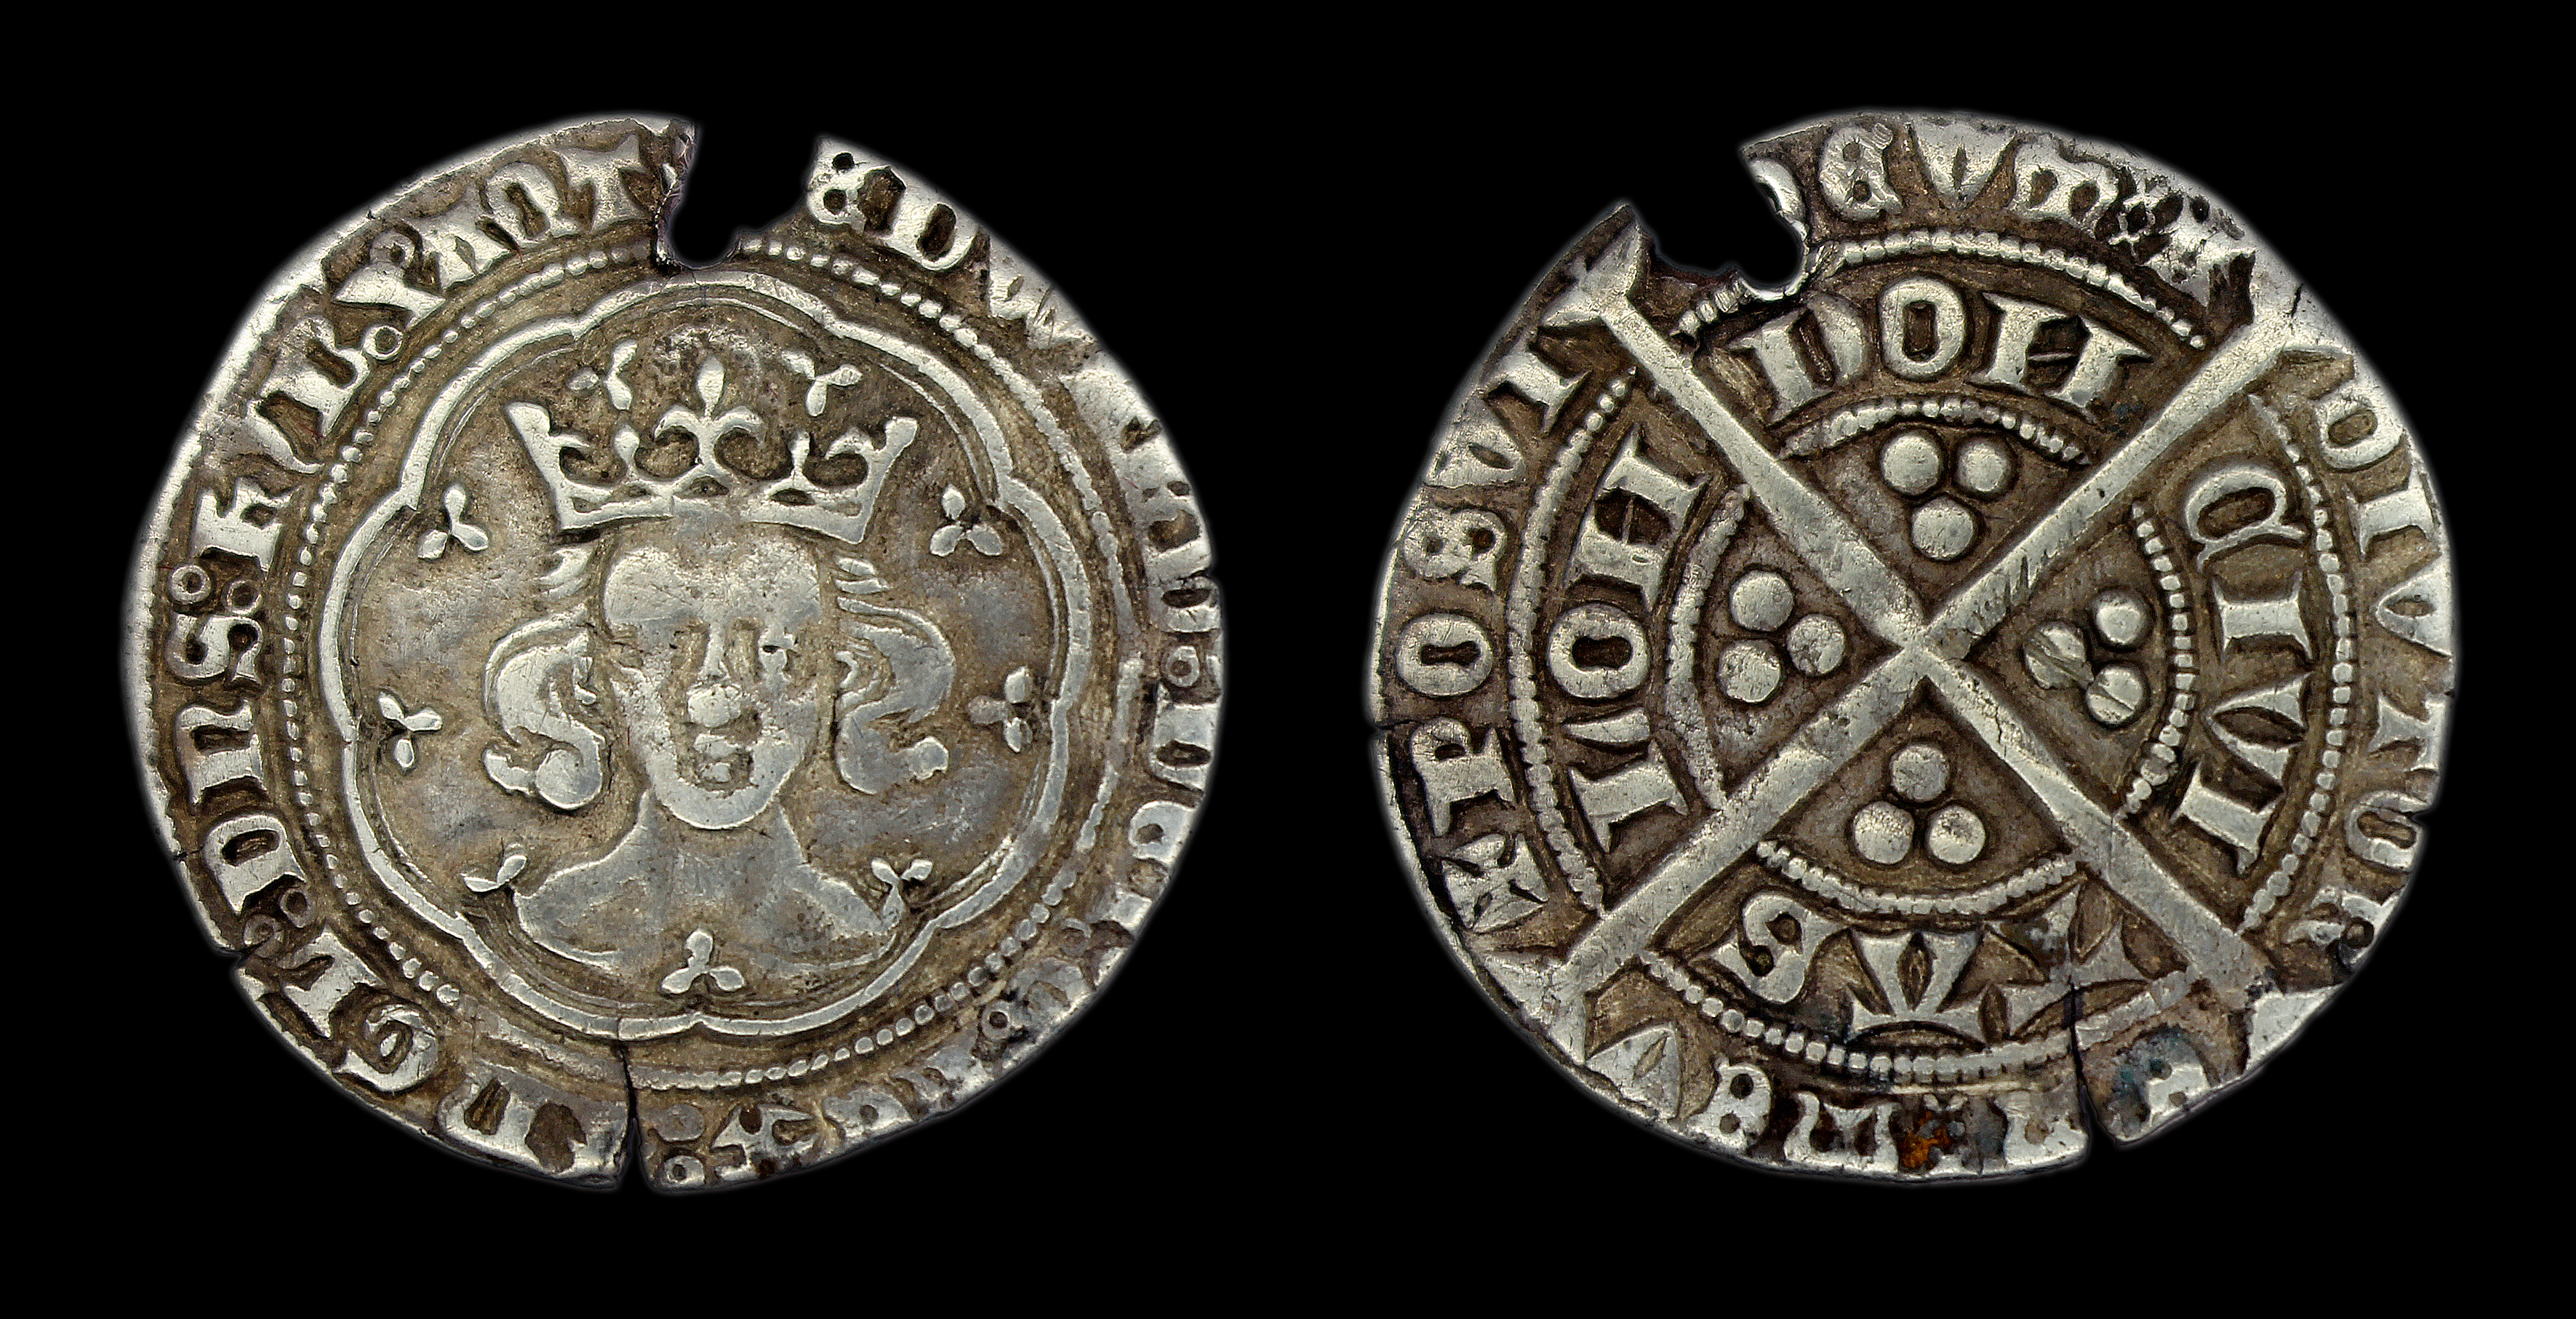 Edward III Treaty Period Groat - GM Coins | Premier UK Coin Dealers3542 x 1813